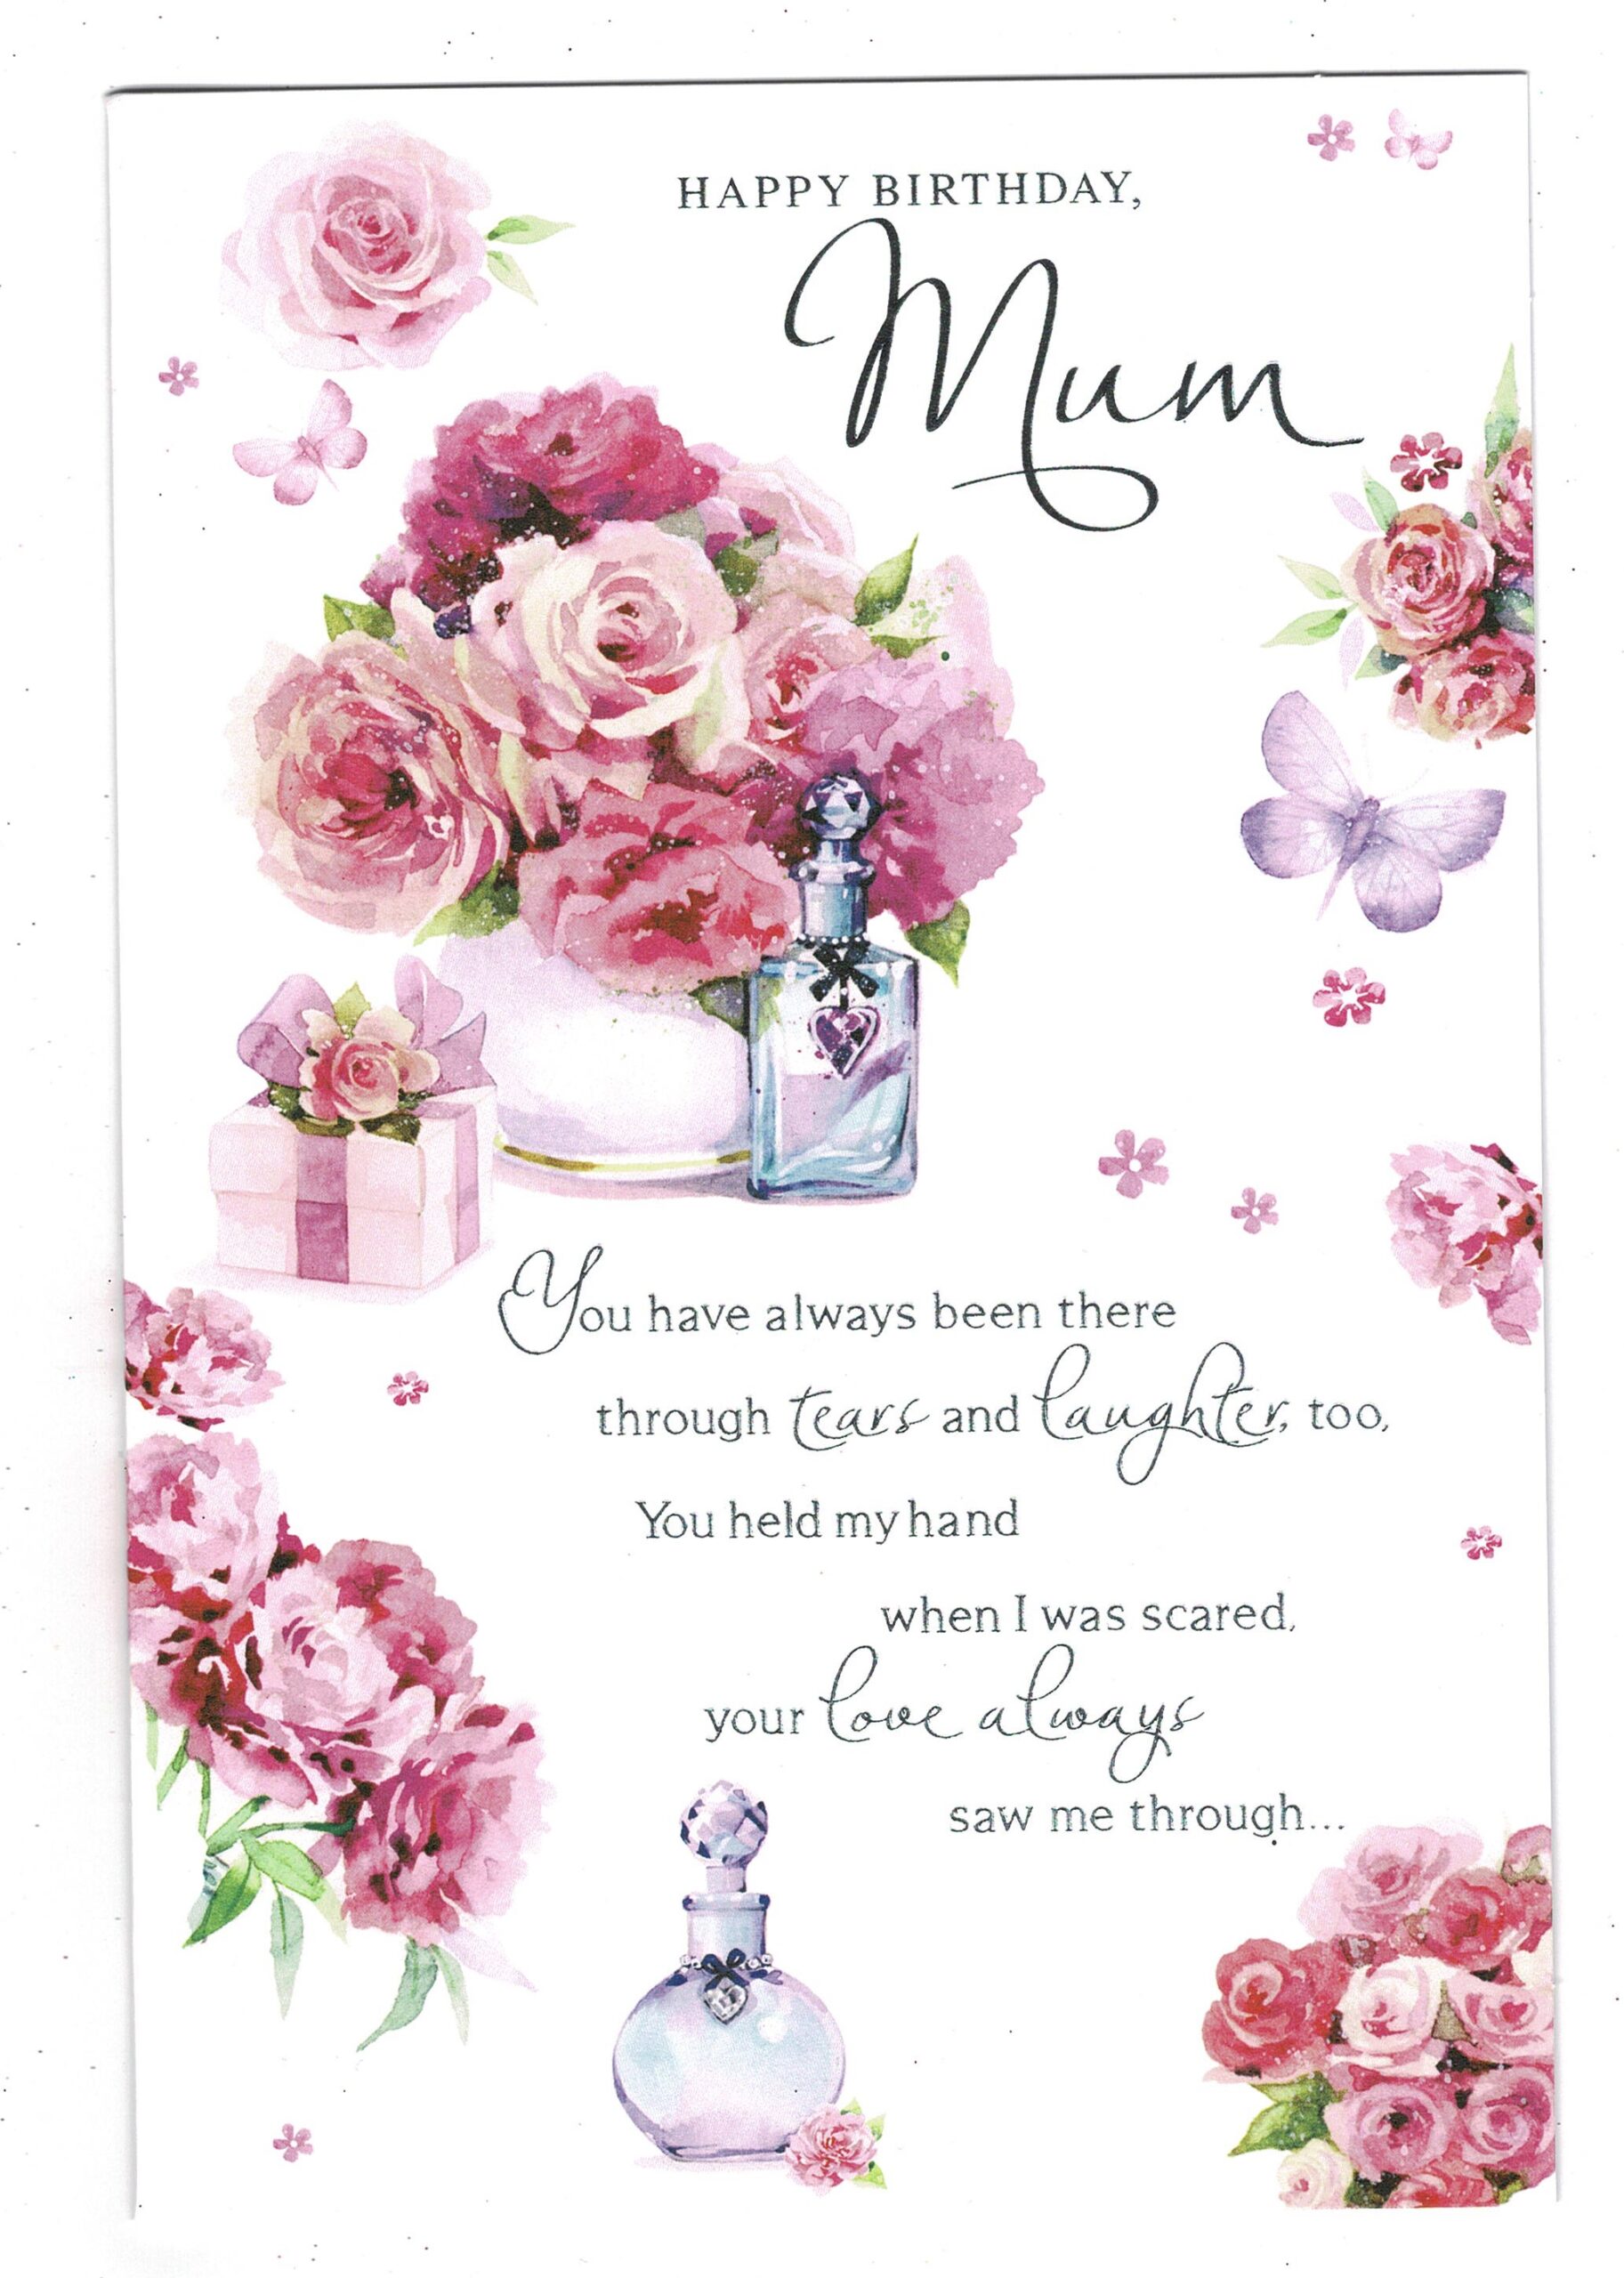 mum-birthday-card-with-rose-design-happy-birthday-mum-with-love